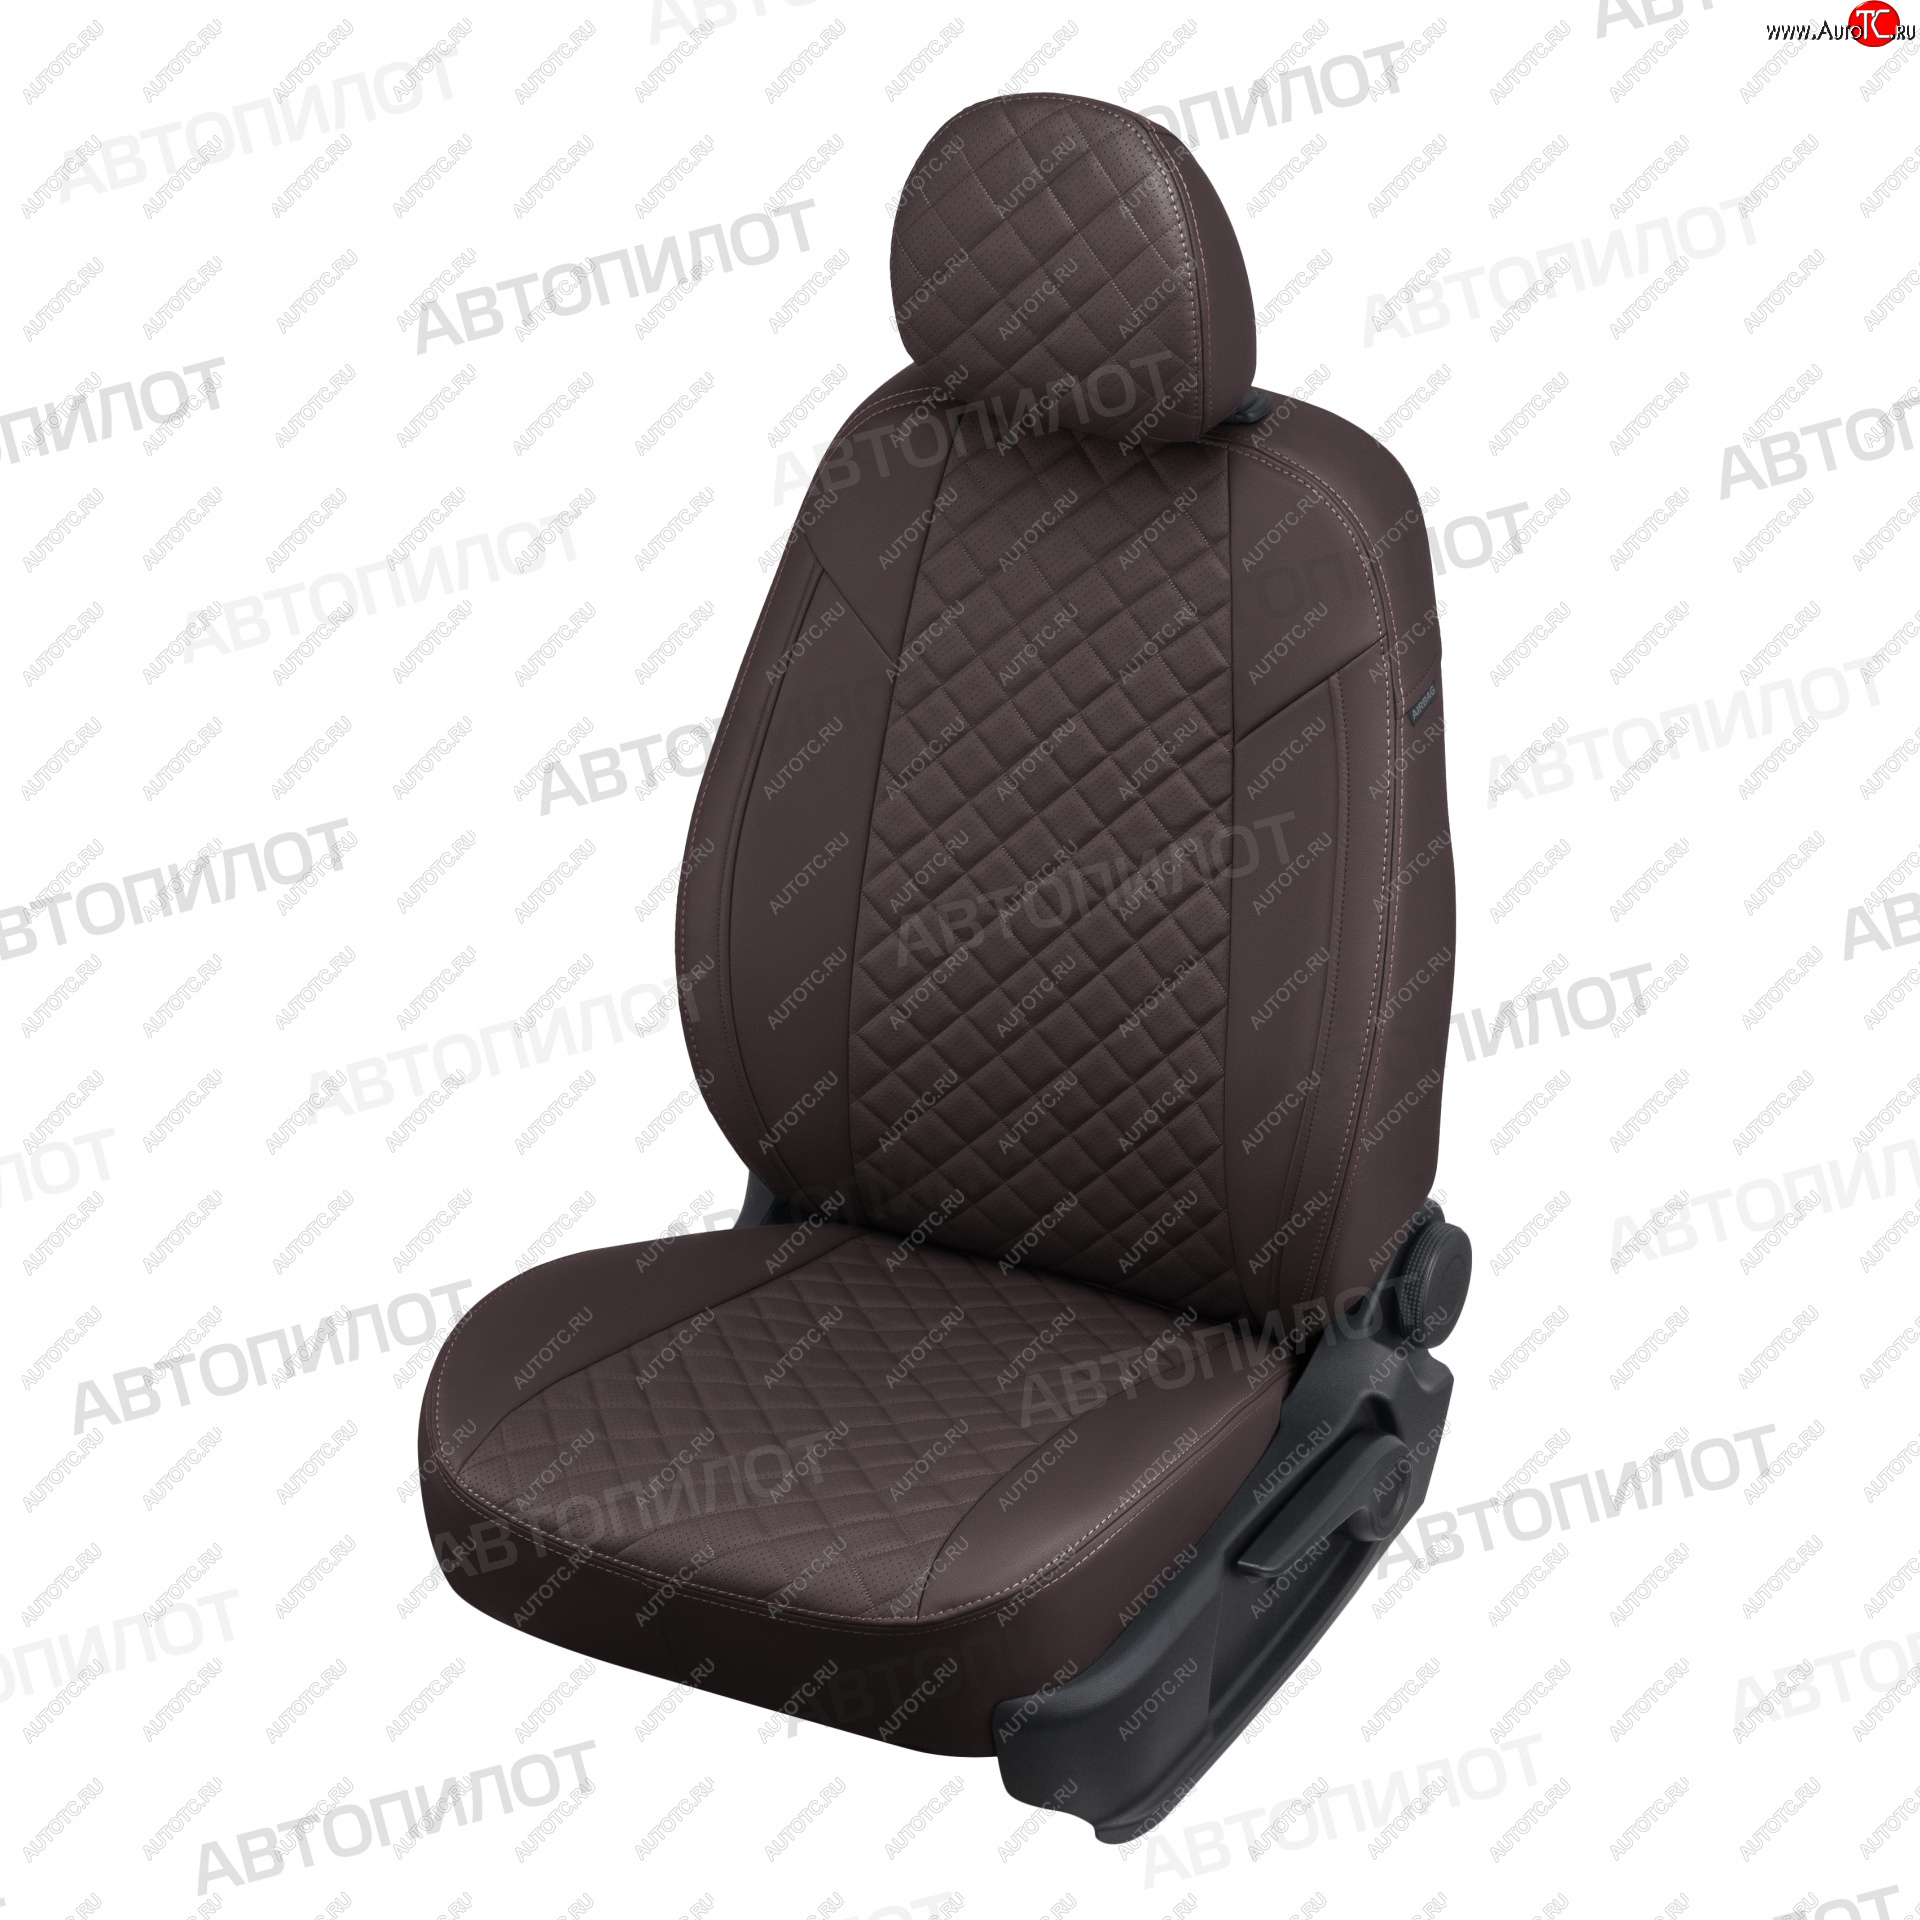 13 999 р. Чехлы сидений (экокожа) Автопилот Ромб  Chevrolet Aveo  T300 (2011-2015) (шоколад)